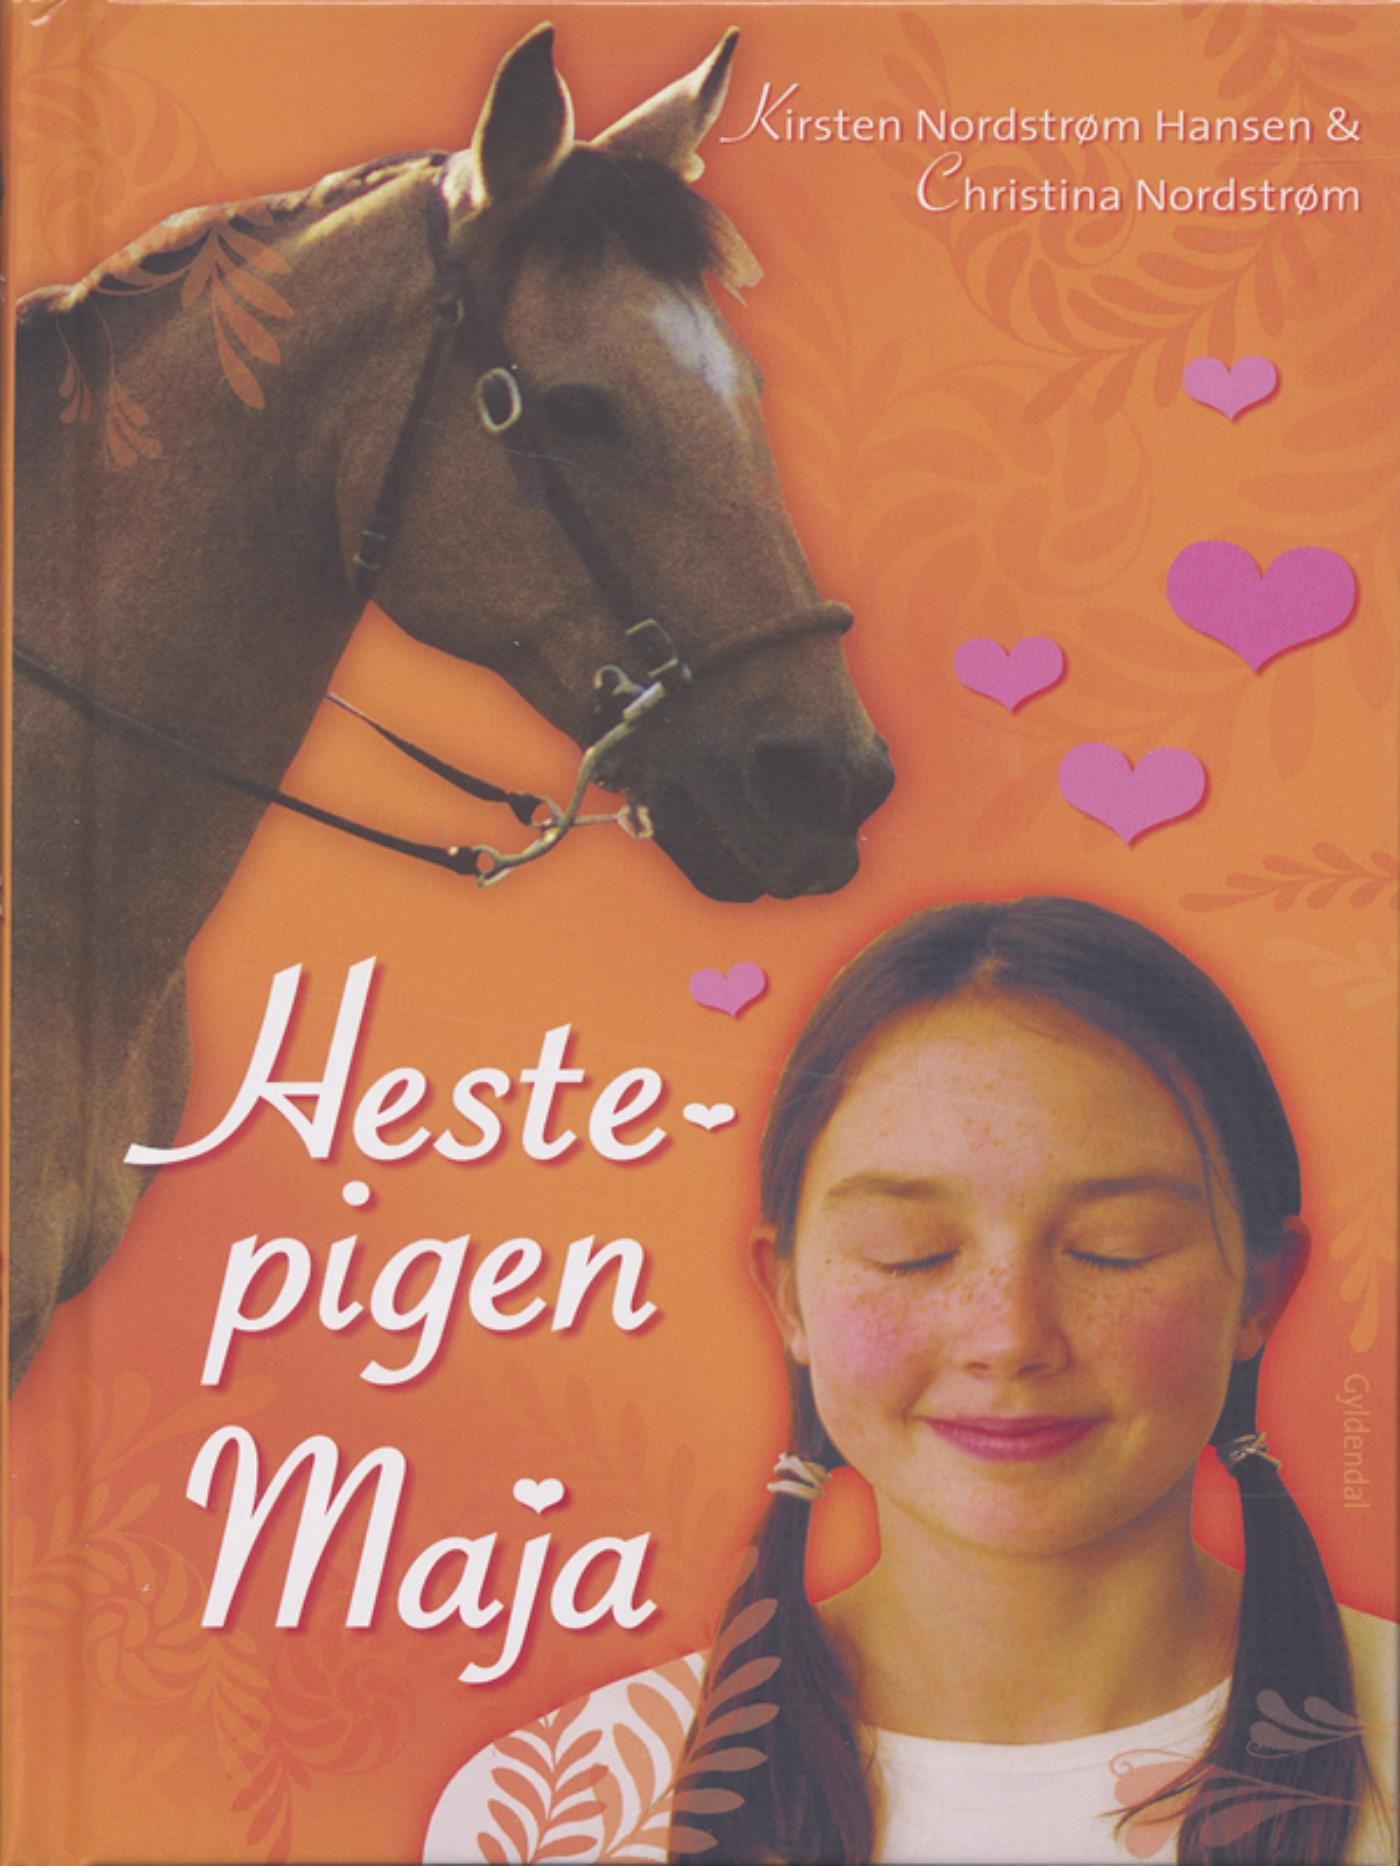 Hestepigen Maja, eBook by Kirsten Nordstrøm Hansen, Christina Nordstrøm